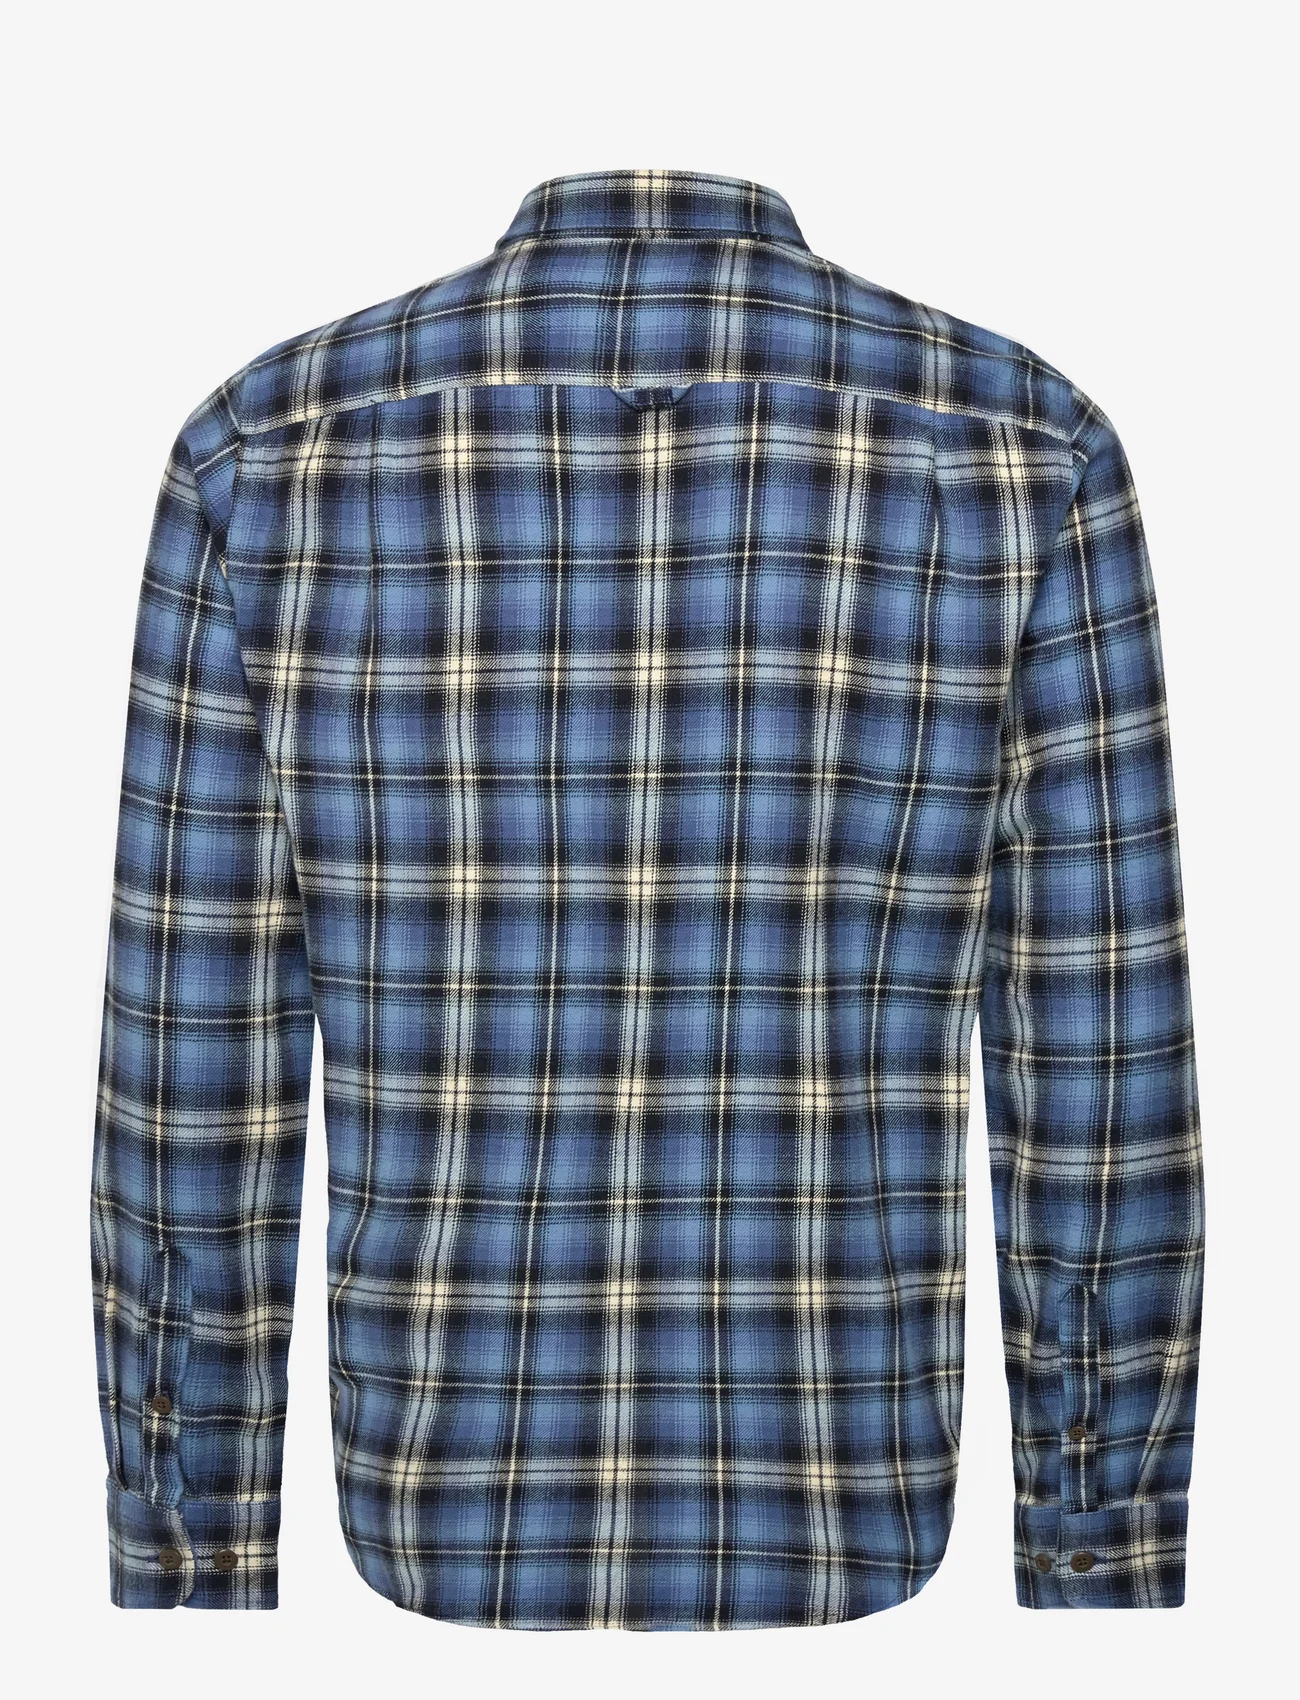 Superdry - L/S COTTON LUMBERJACK SHIRT - rutiga skjortor - burghley check blue - 1